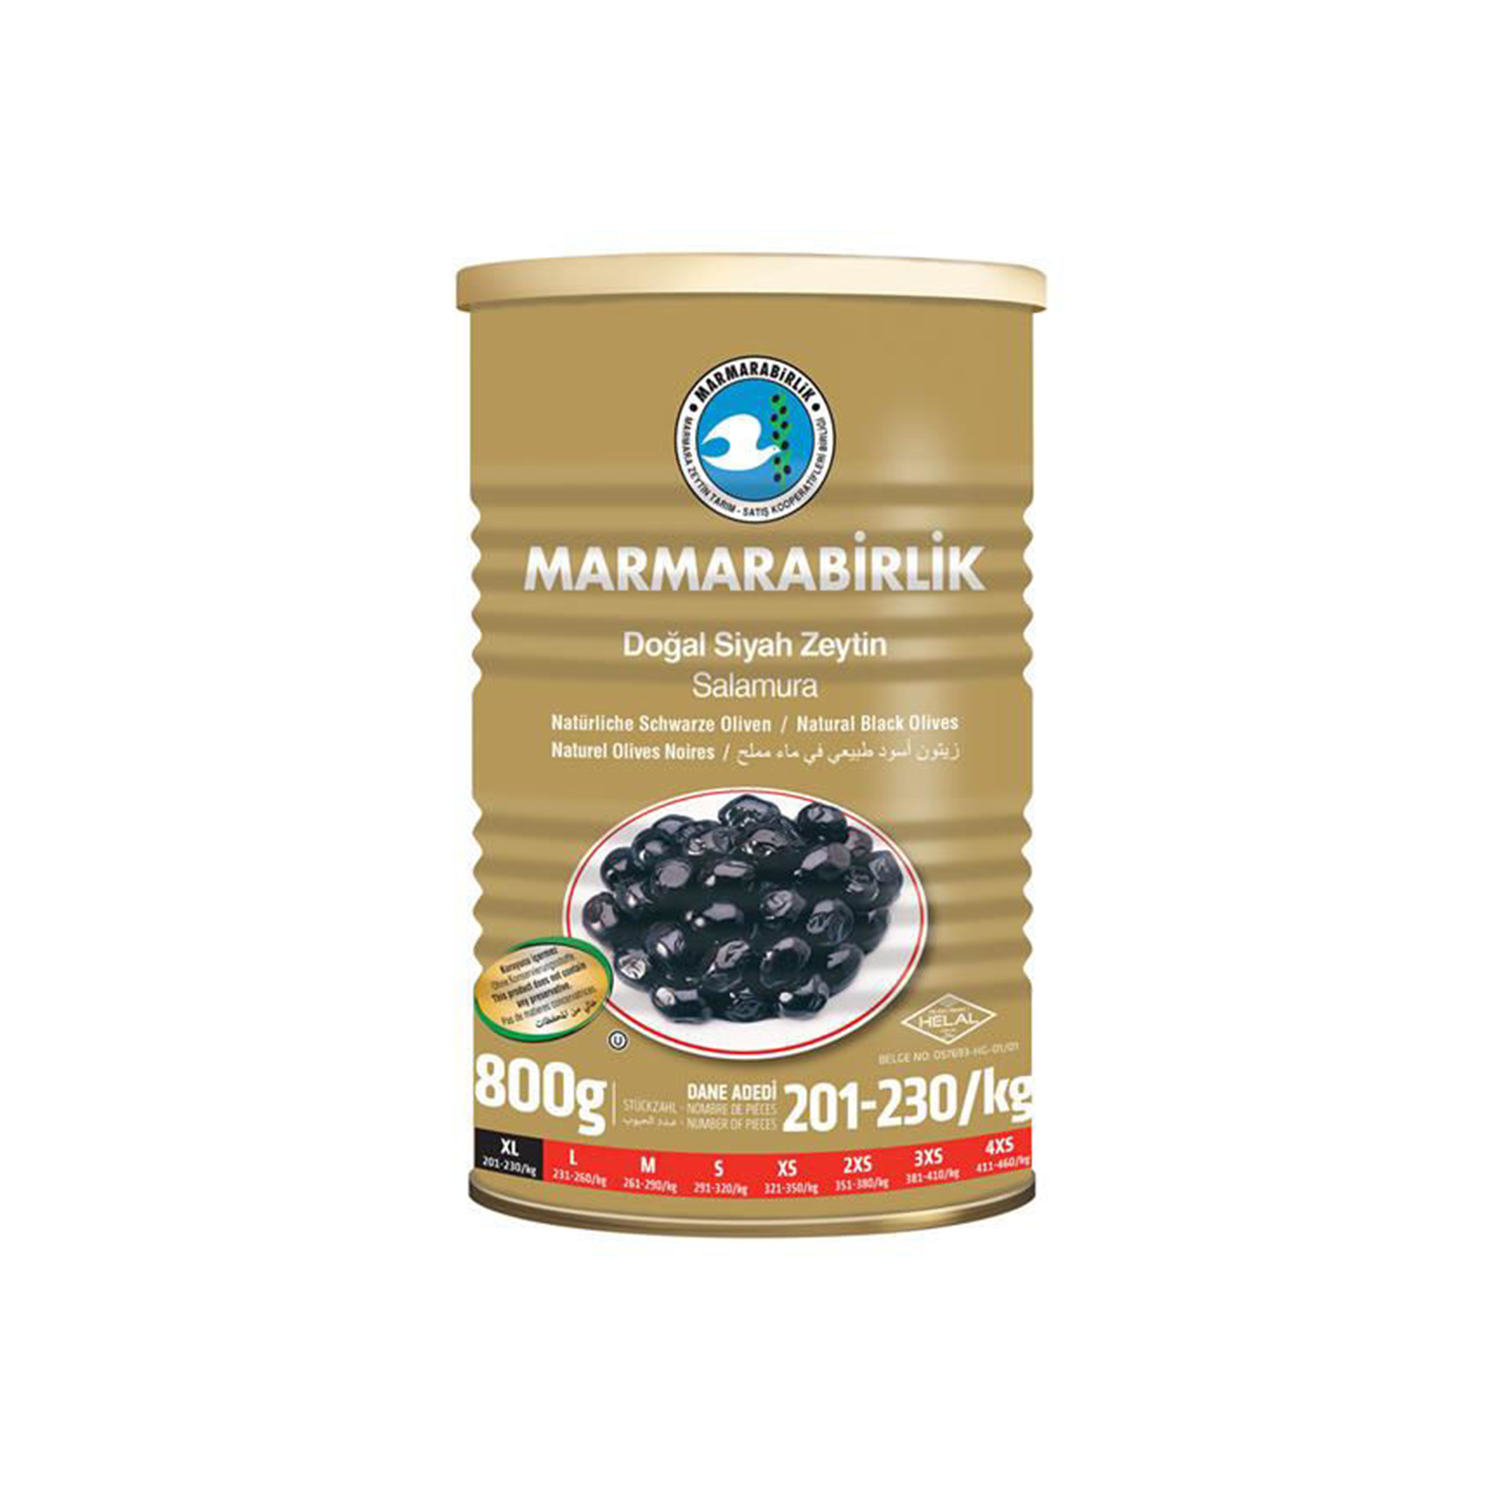 Marmarabirlik Black Olive XL In Salt Water 800g